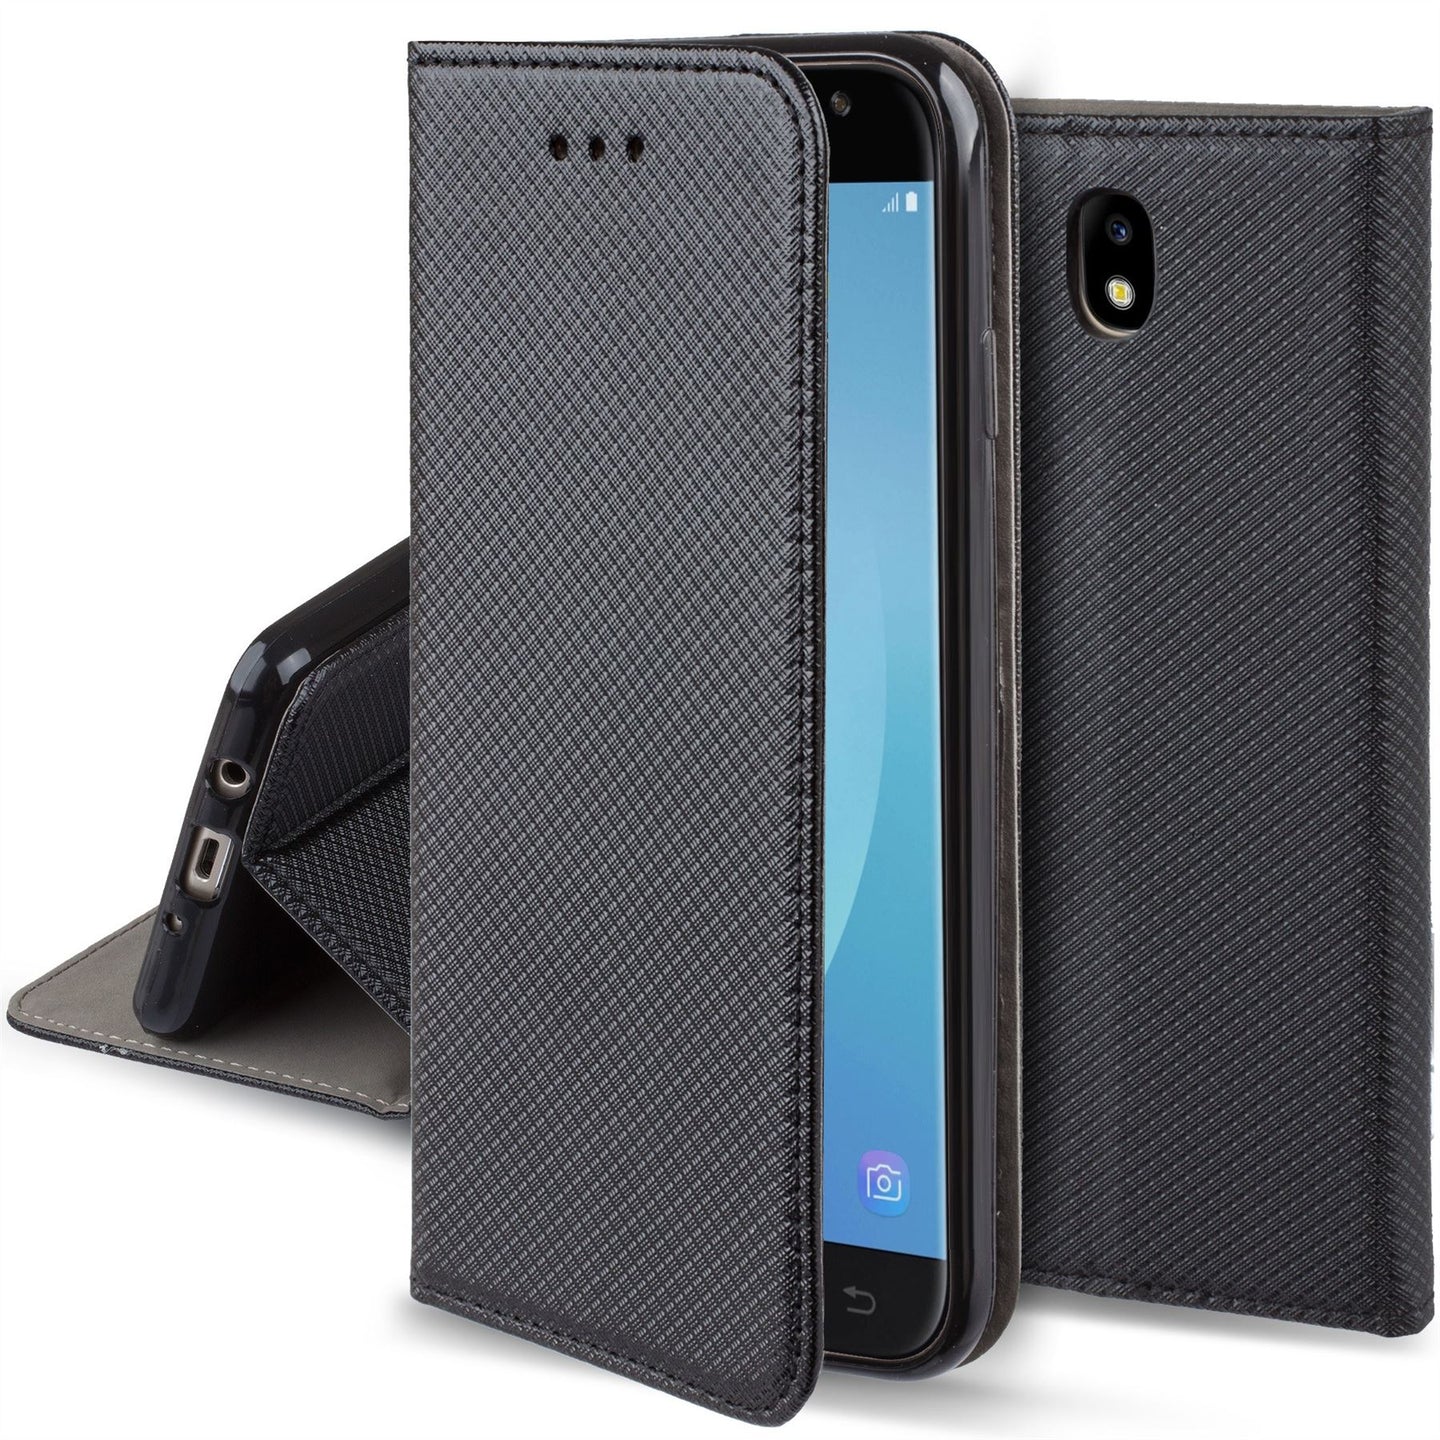 Moozy Case Flip Cover for Samsung J5 2017, Black - Smart Magnetic Flip Case with Card Holder and Stand